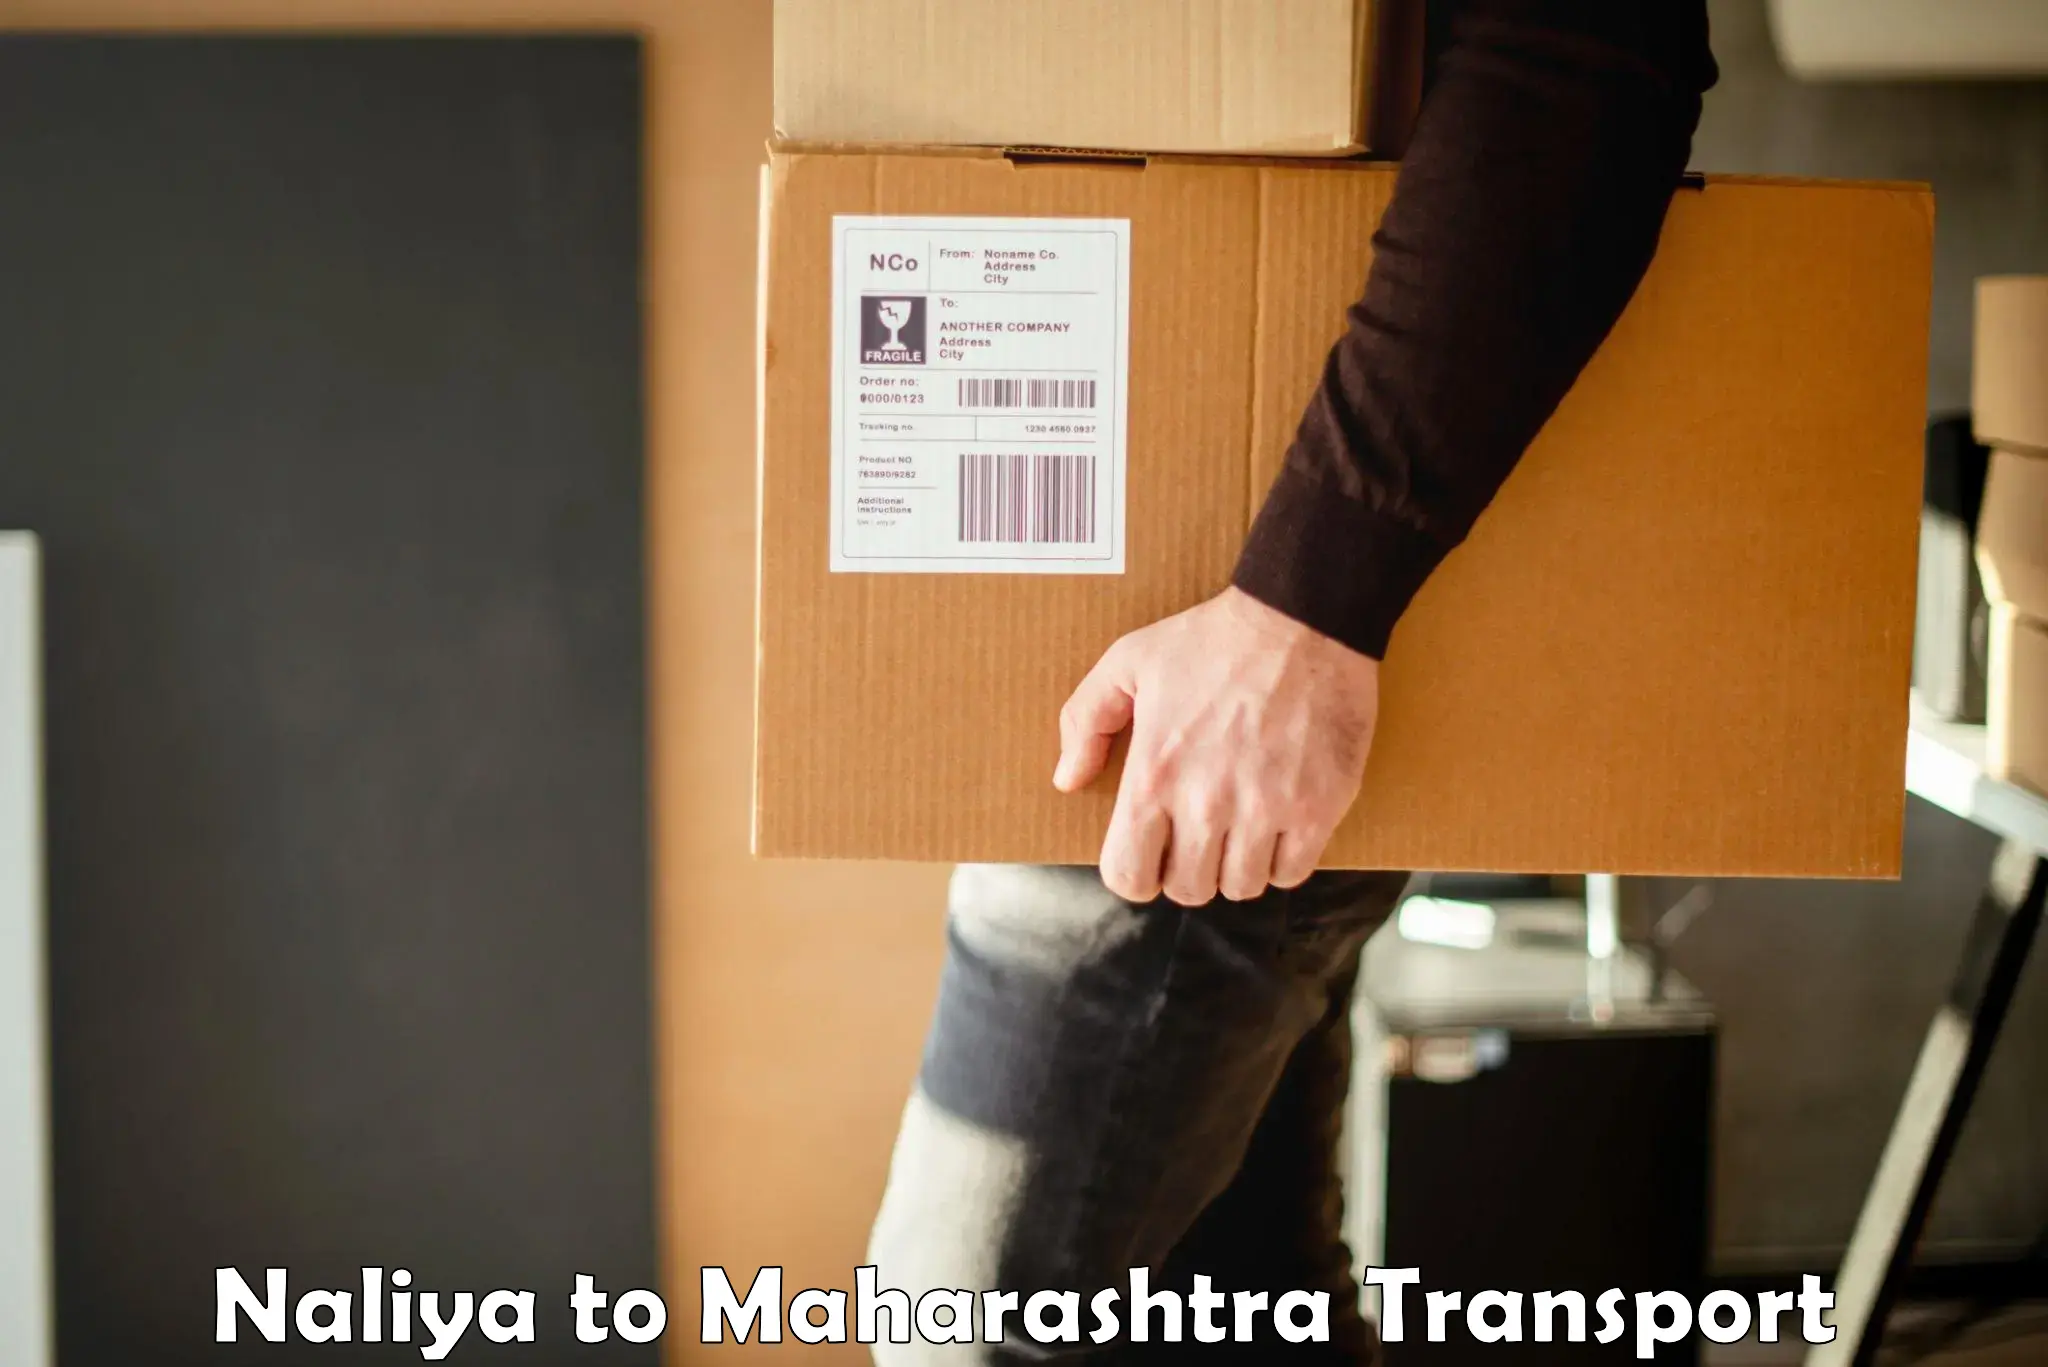 Truck transport companies in India Naliya to Omerga